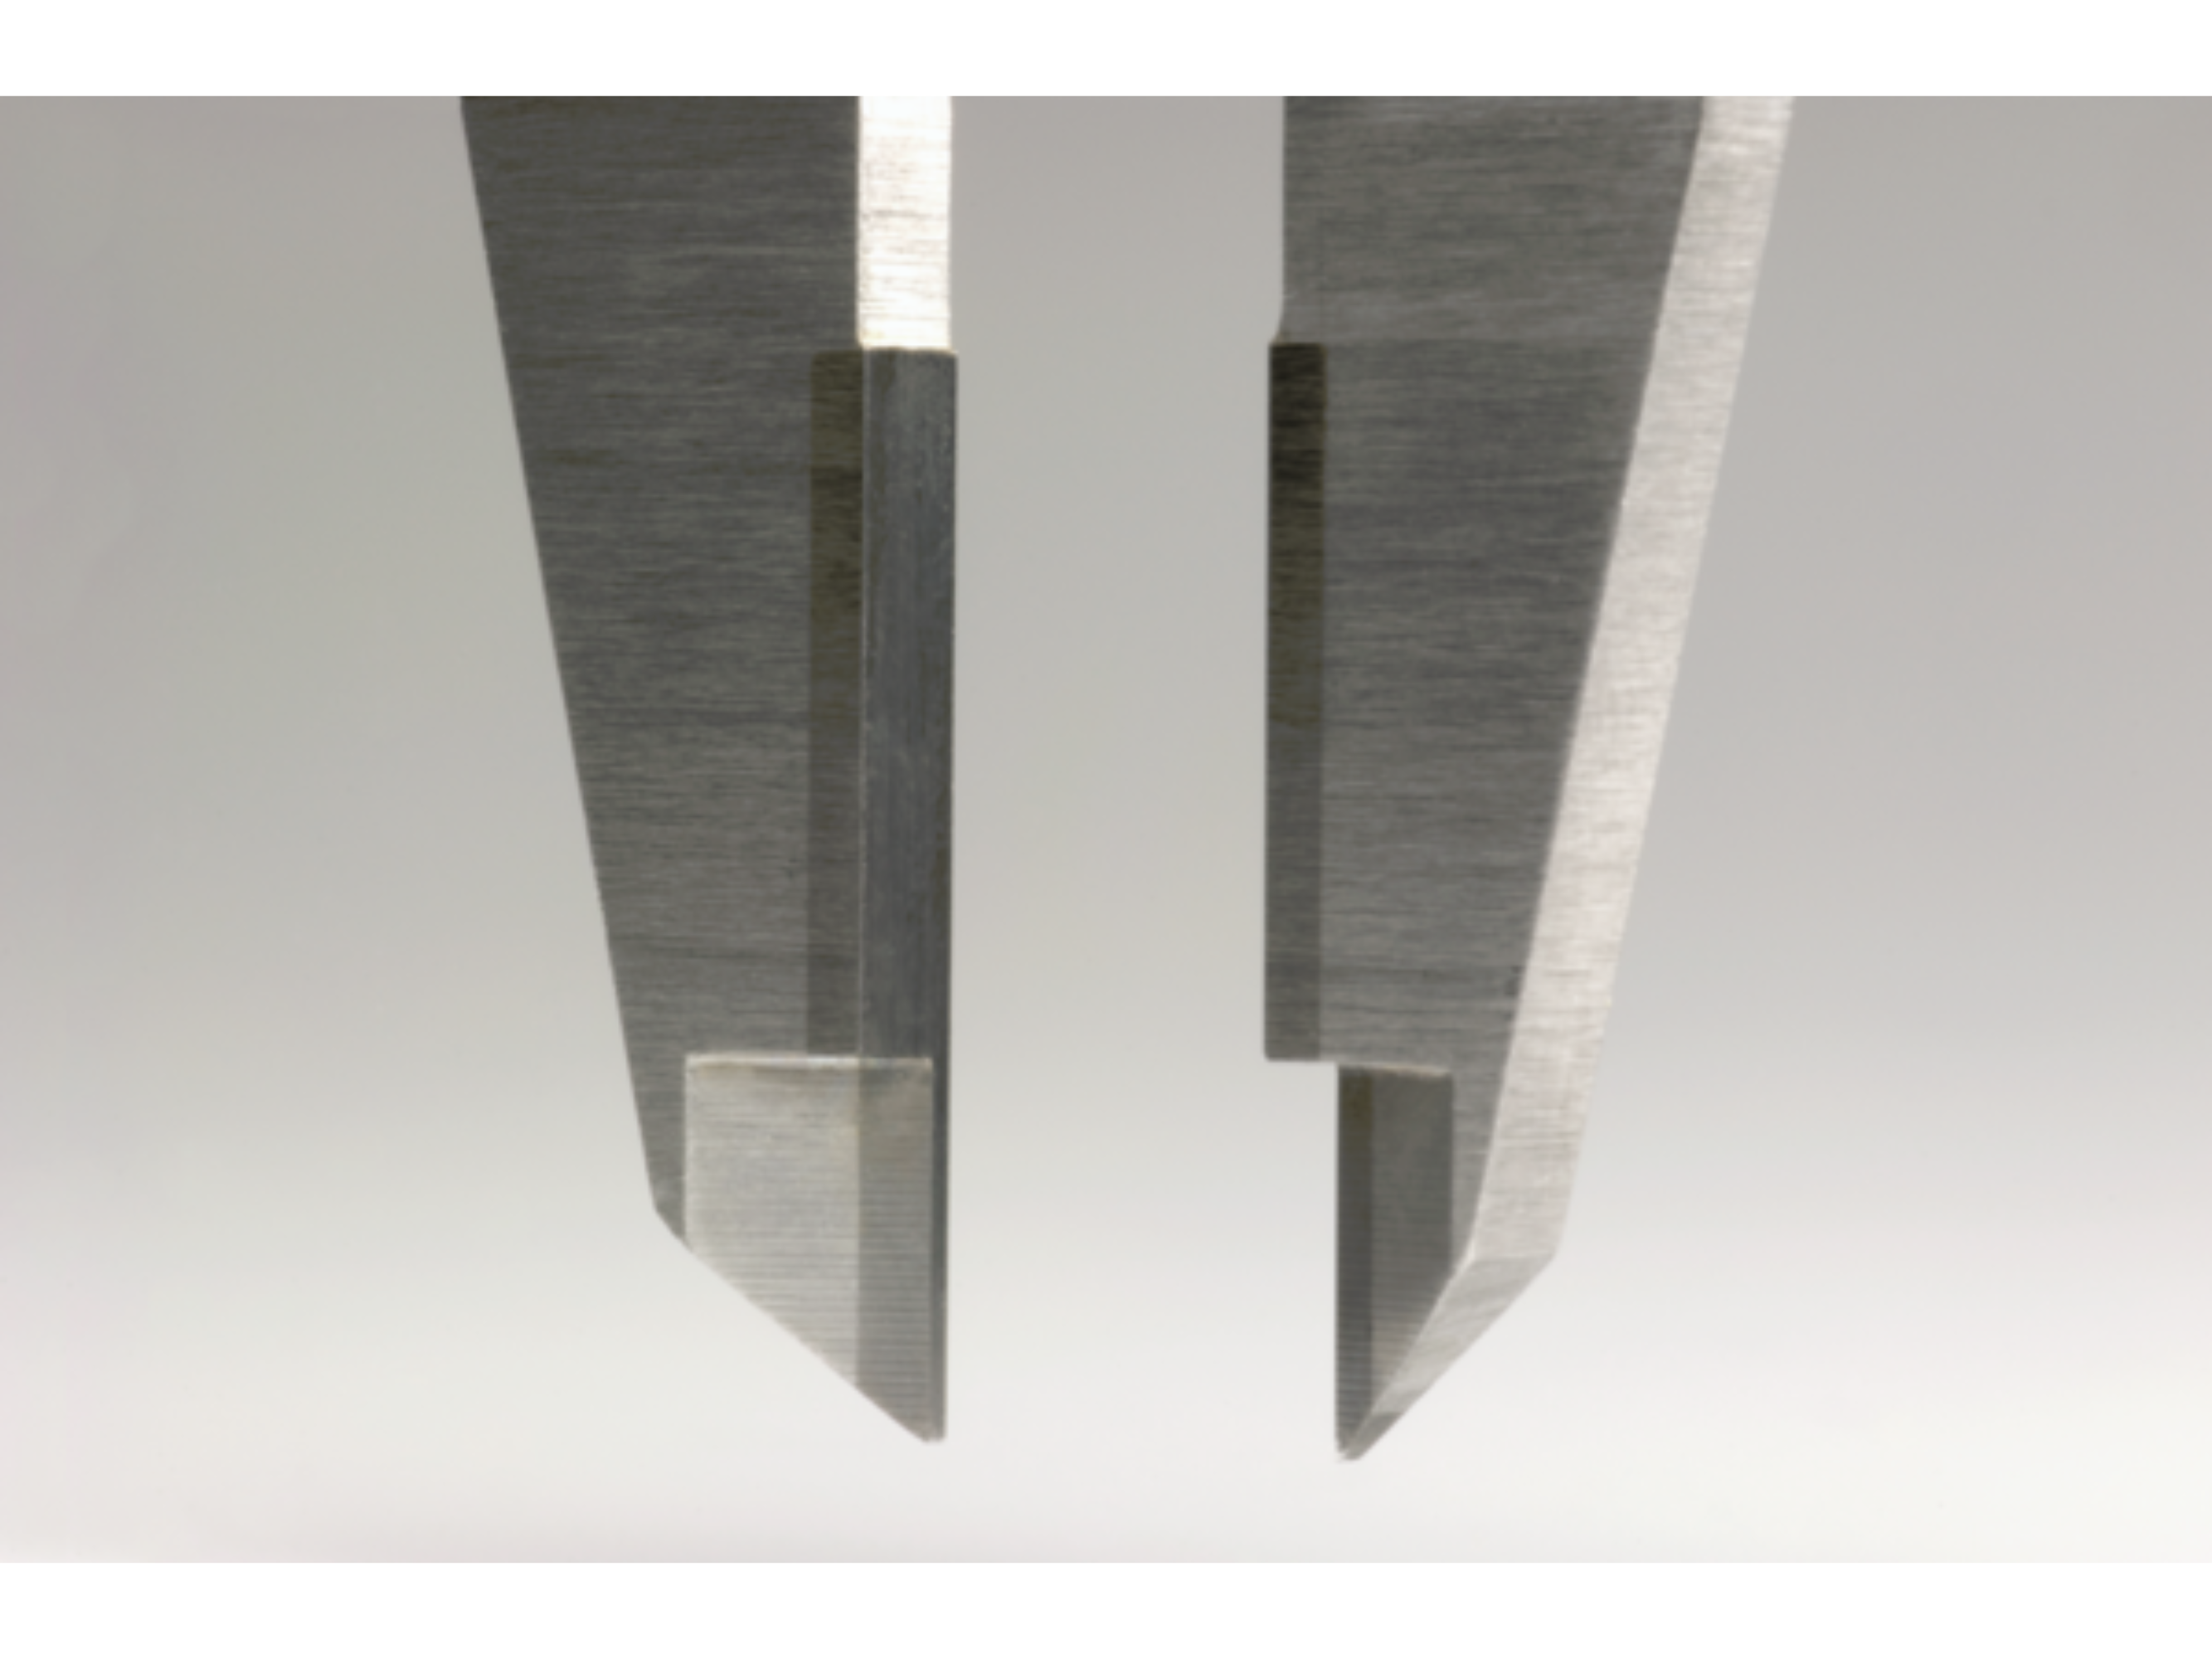 ABSOLUTE AOS Carbide Caliper 0-150mm Square Depth Rod & Thumb Roller 500-159-30